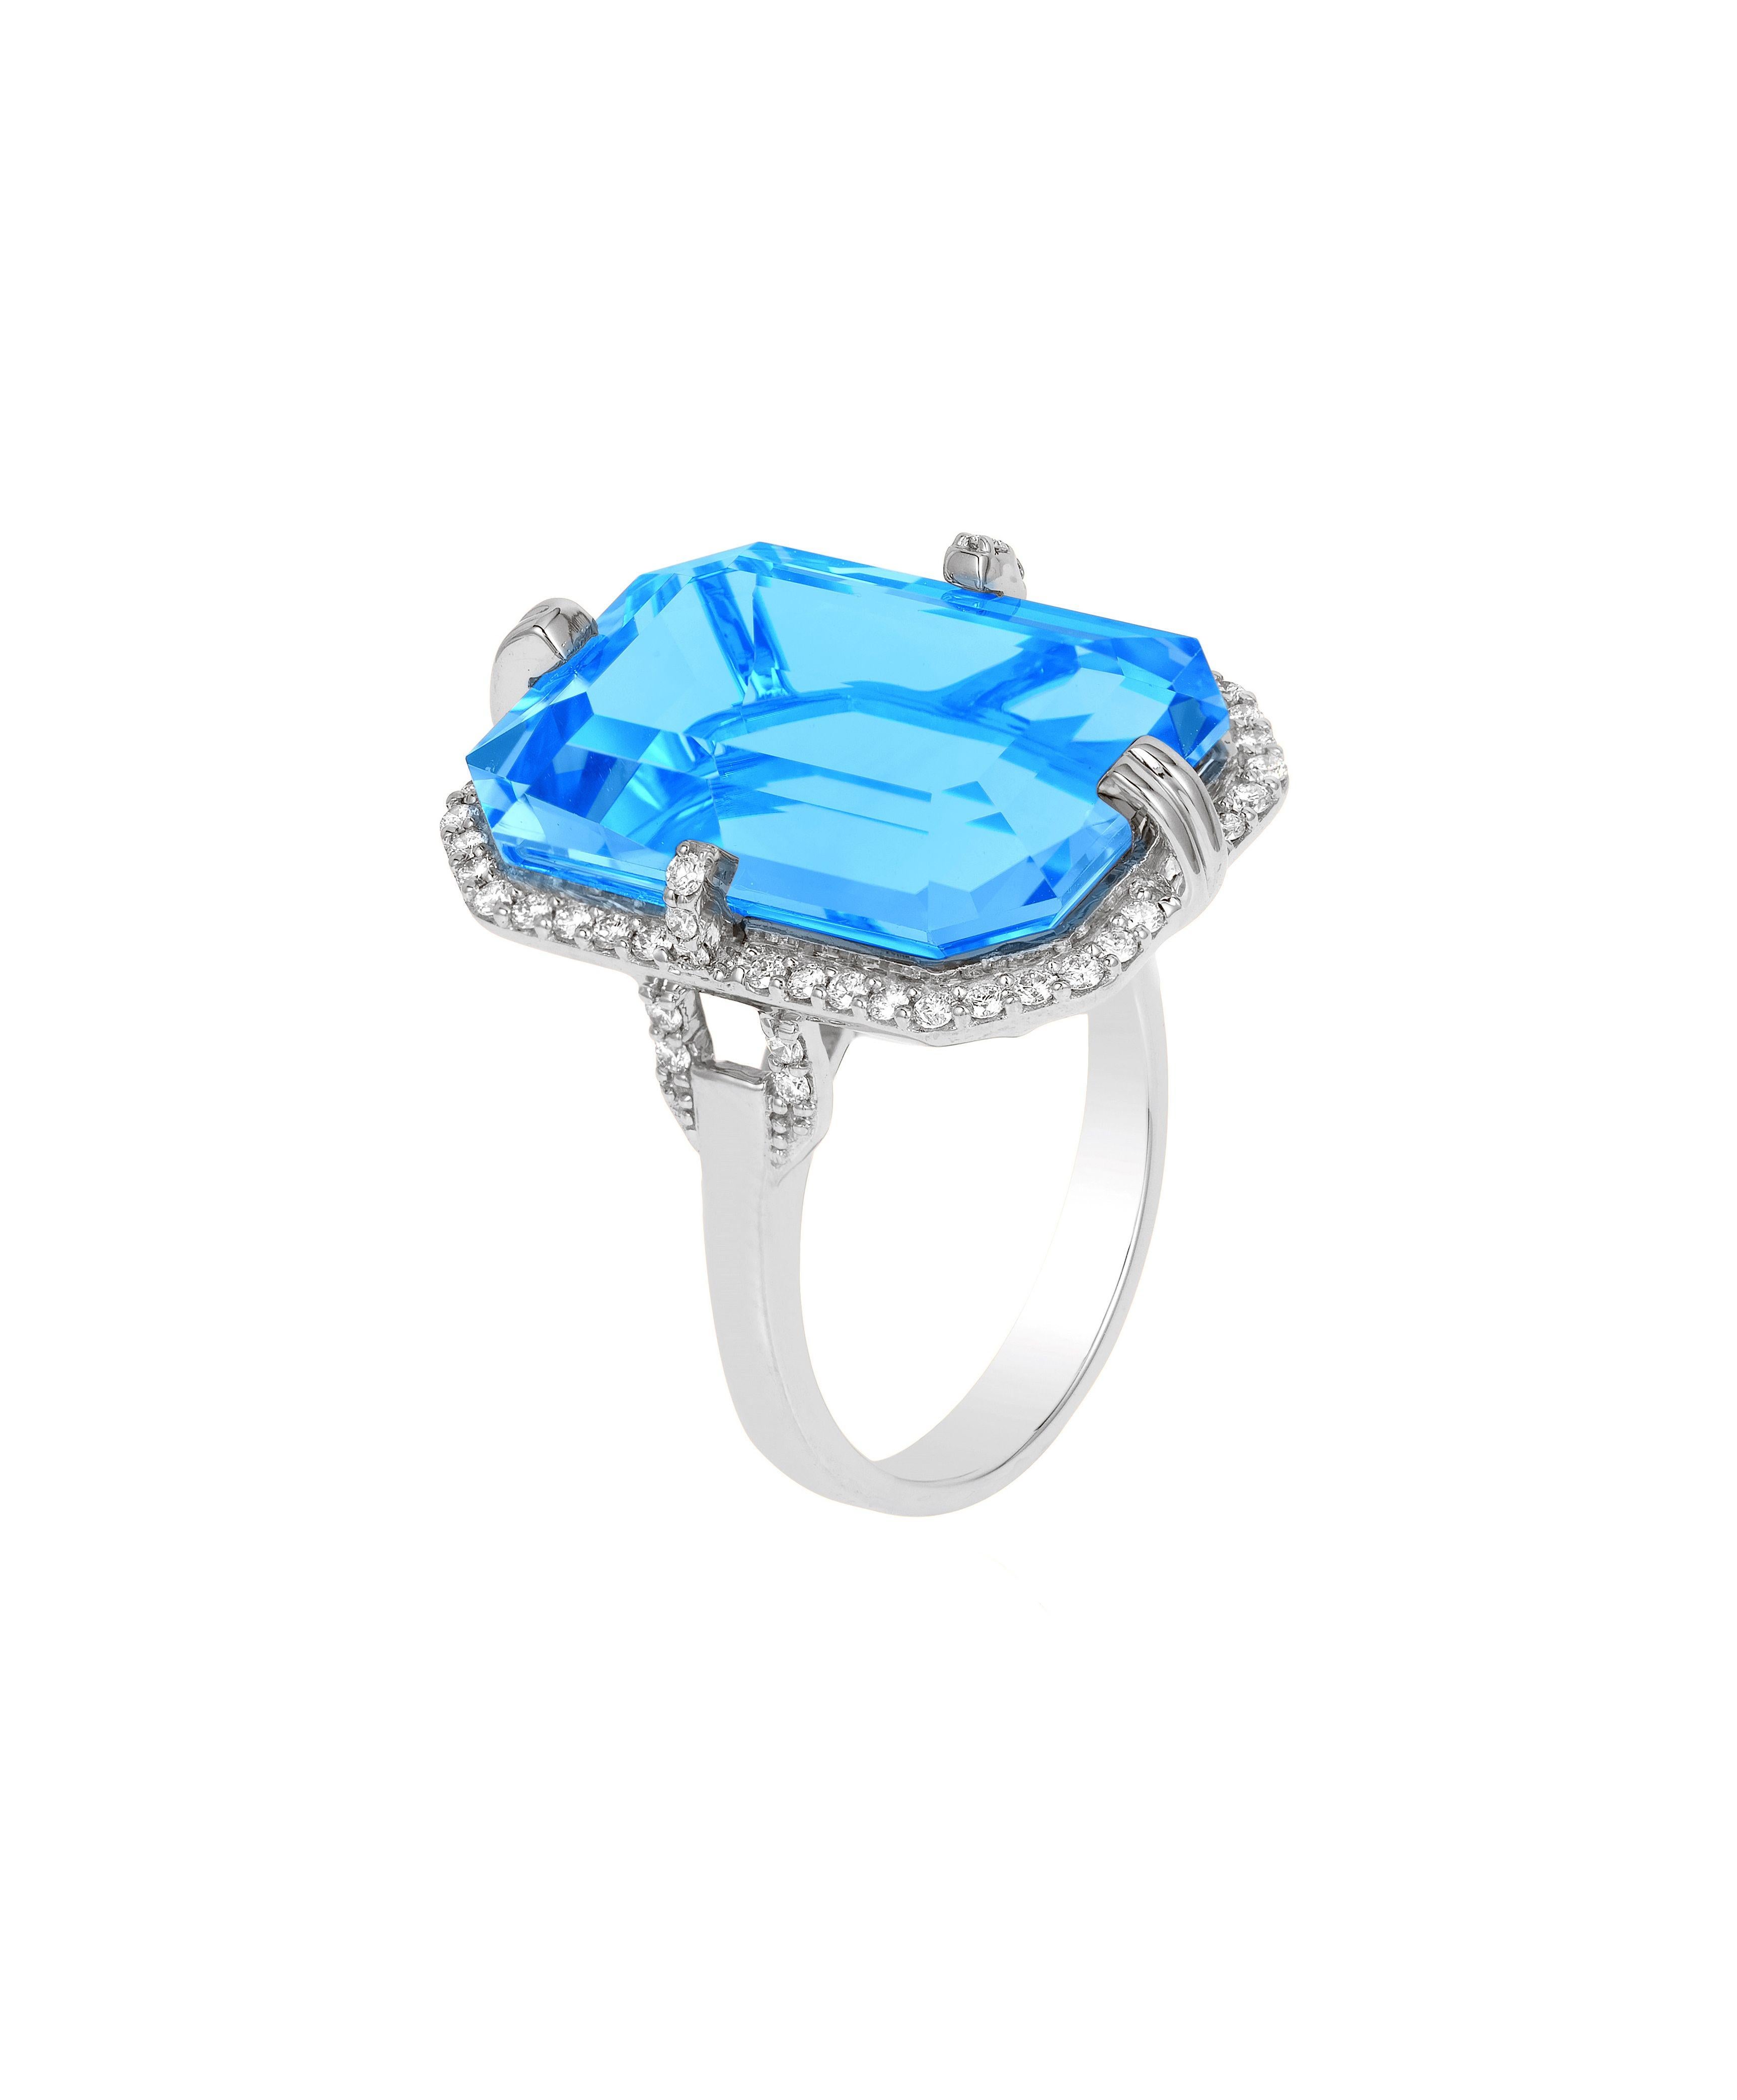 Contemporary Goshwara Blue Topaz with Diamonds Ring For Sale